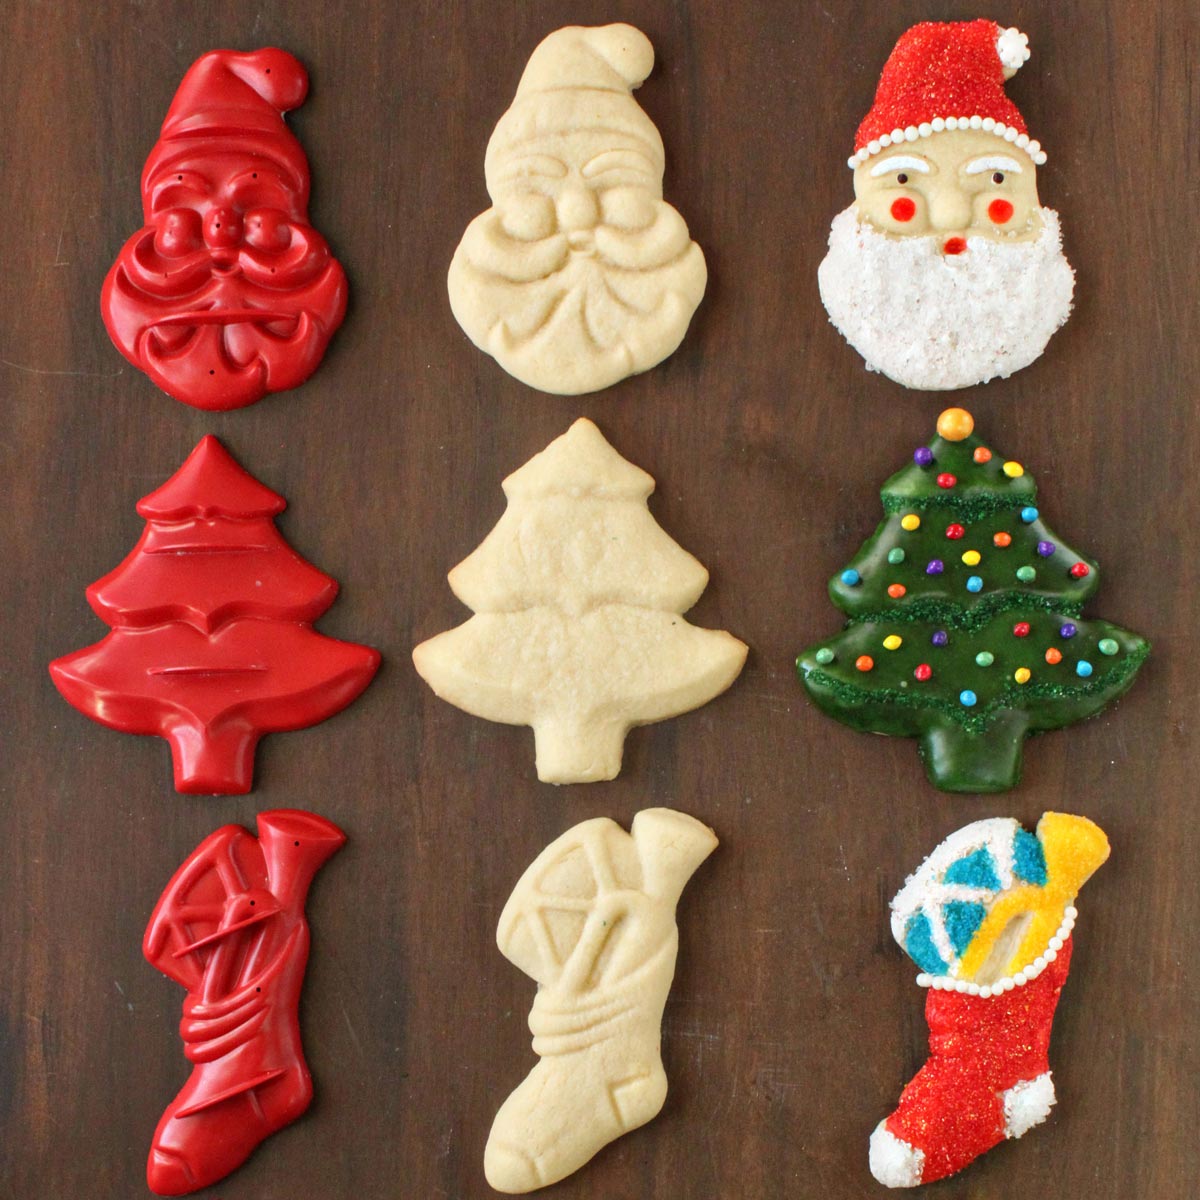 Cookie cutters, plain cookies and decorated vintage sugar cookies.